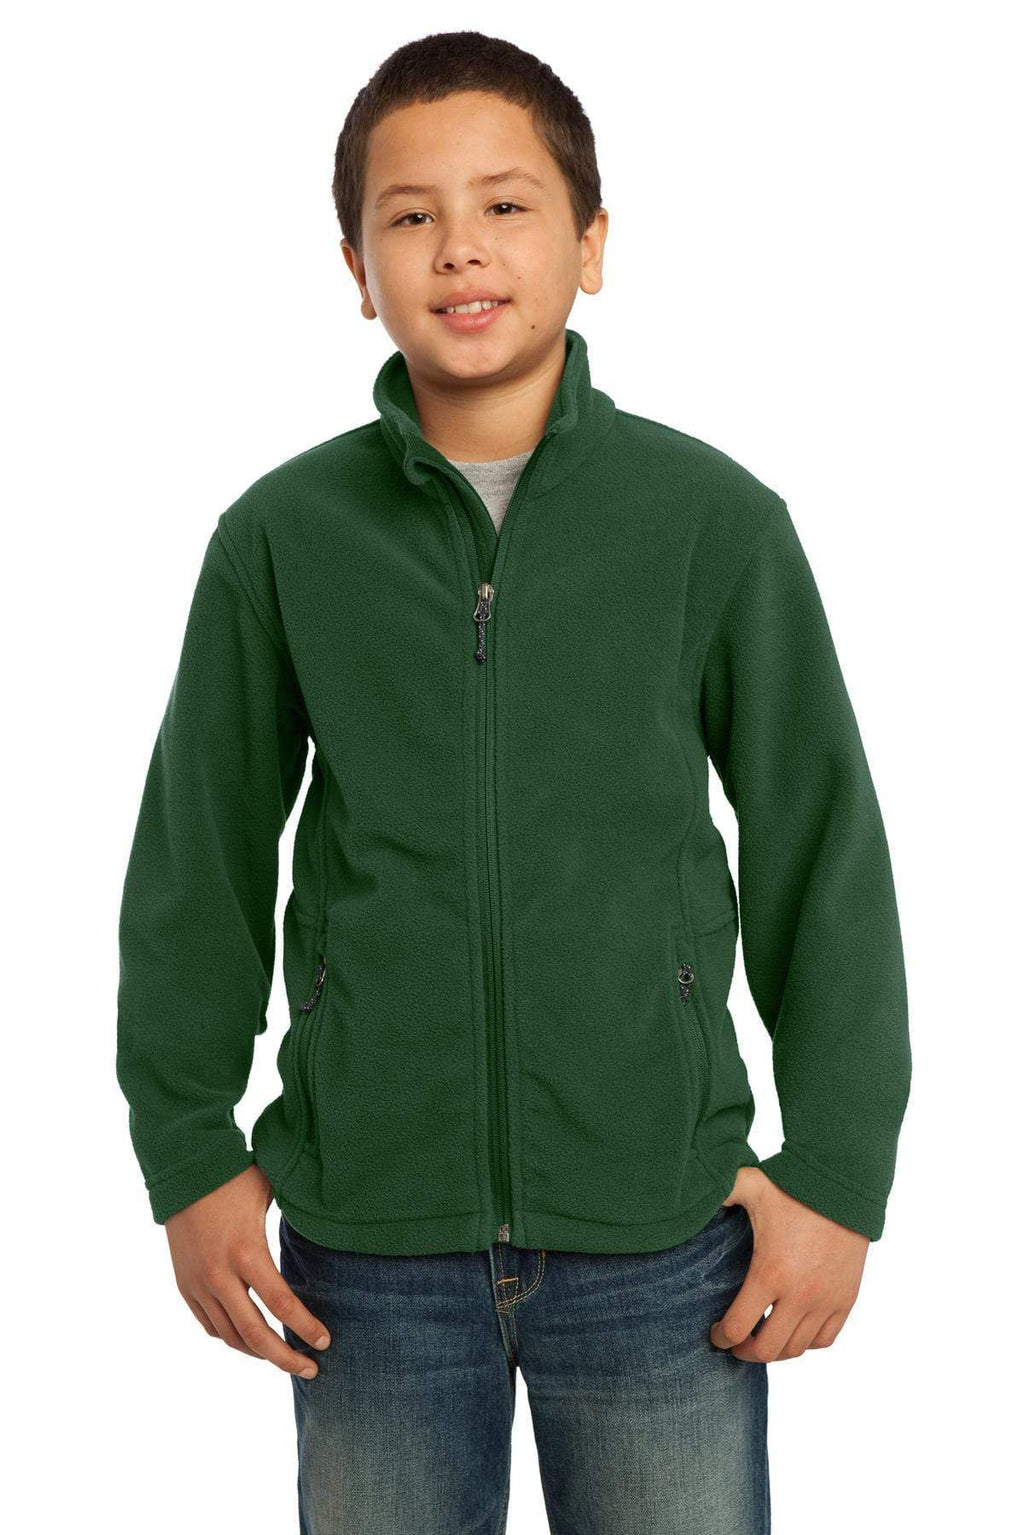 Port Authority Youth Value Fleece Jacket Y2179414